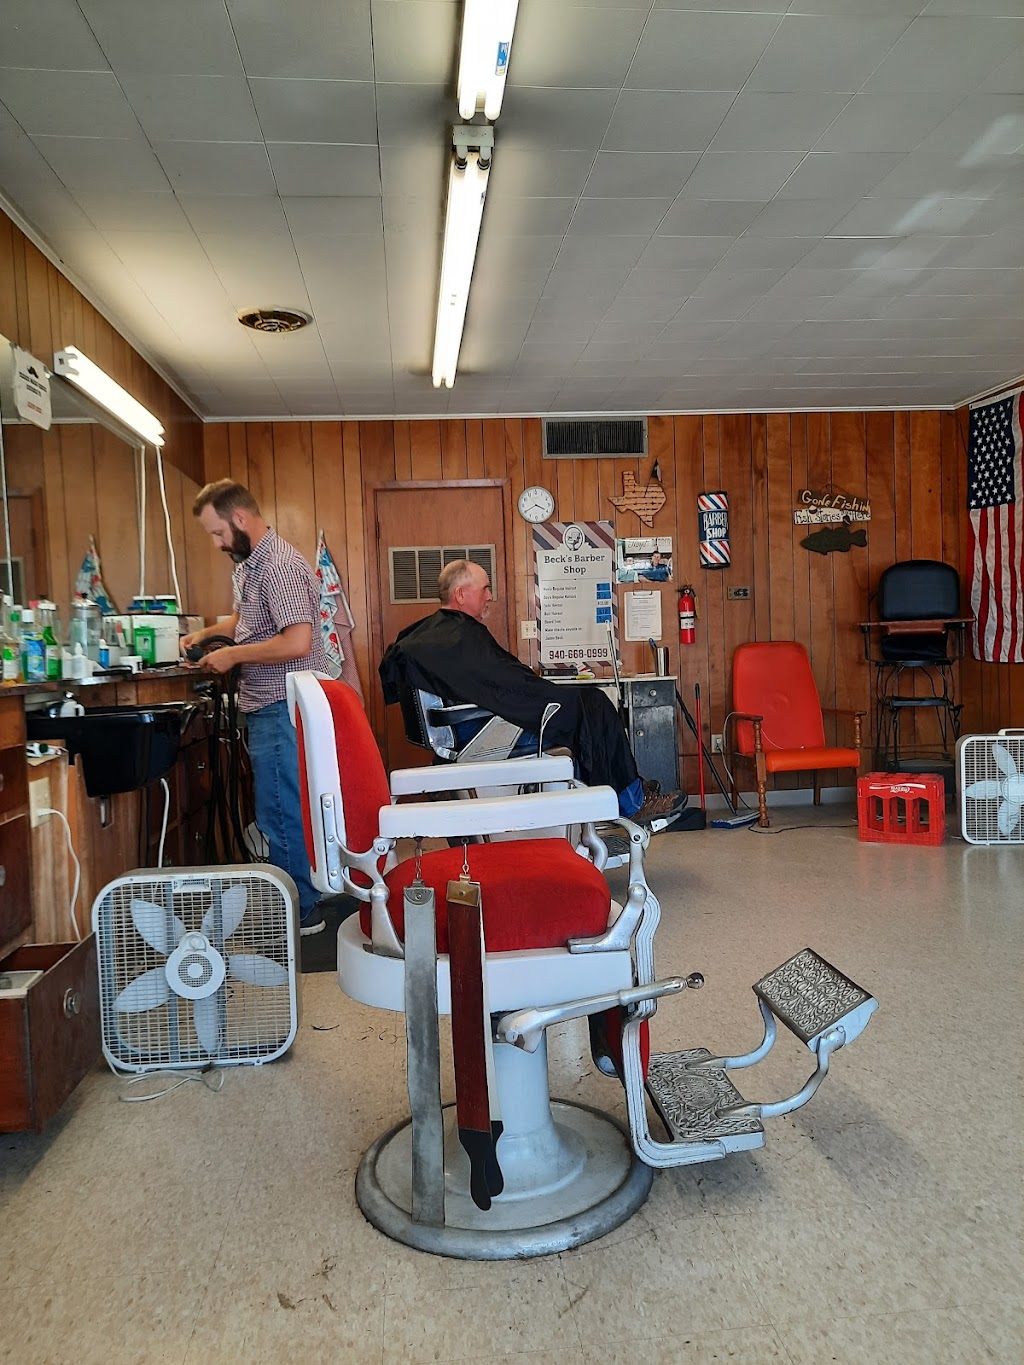 Becks Barber Shop | 121 Main St, Lindsay, TX 76250, USA | Phone: (940) 668-0999